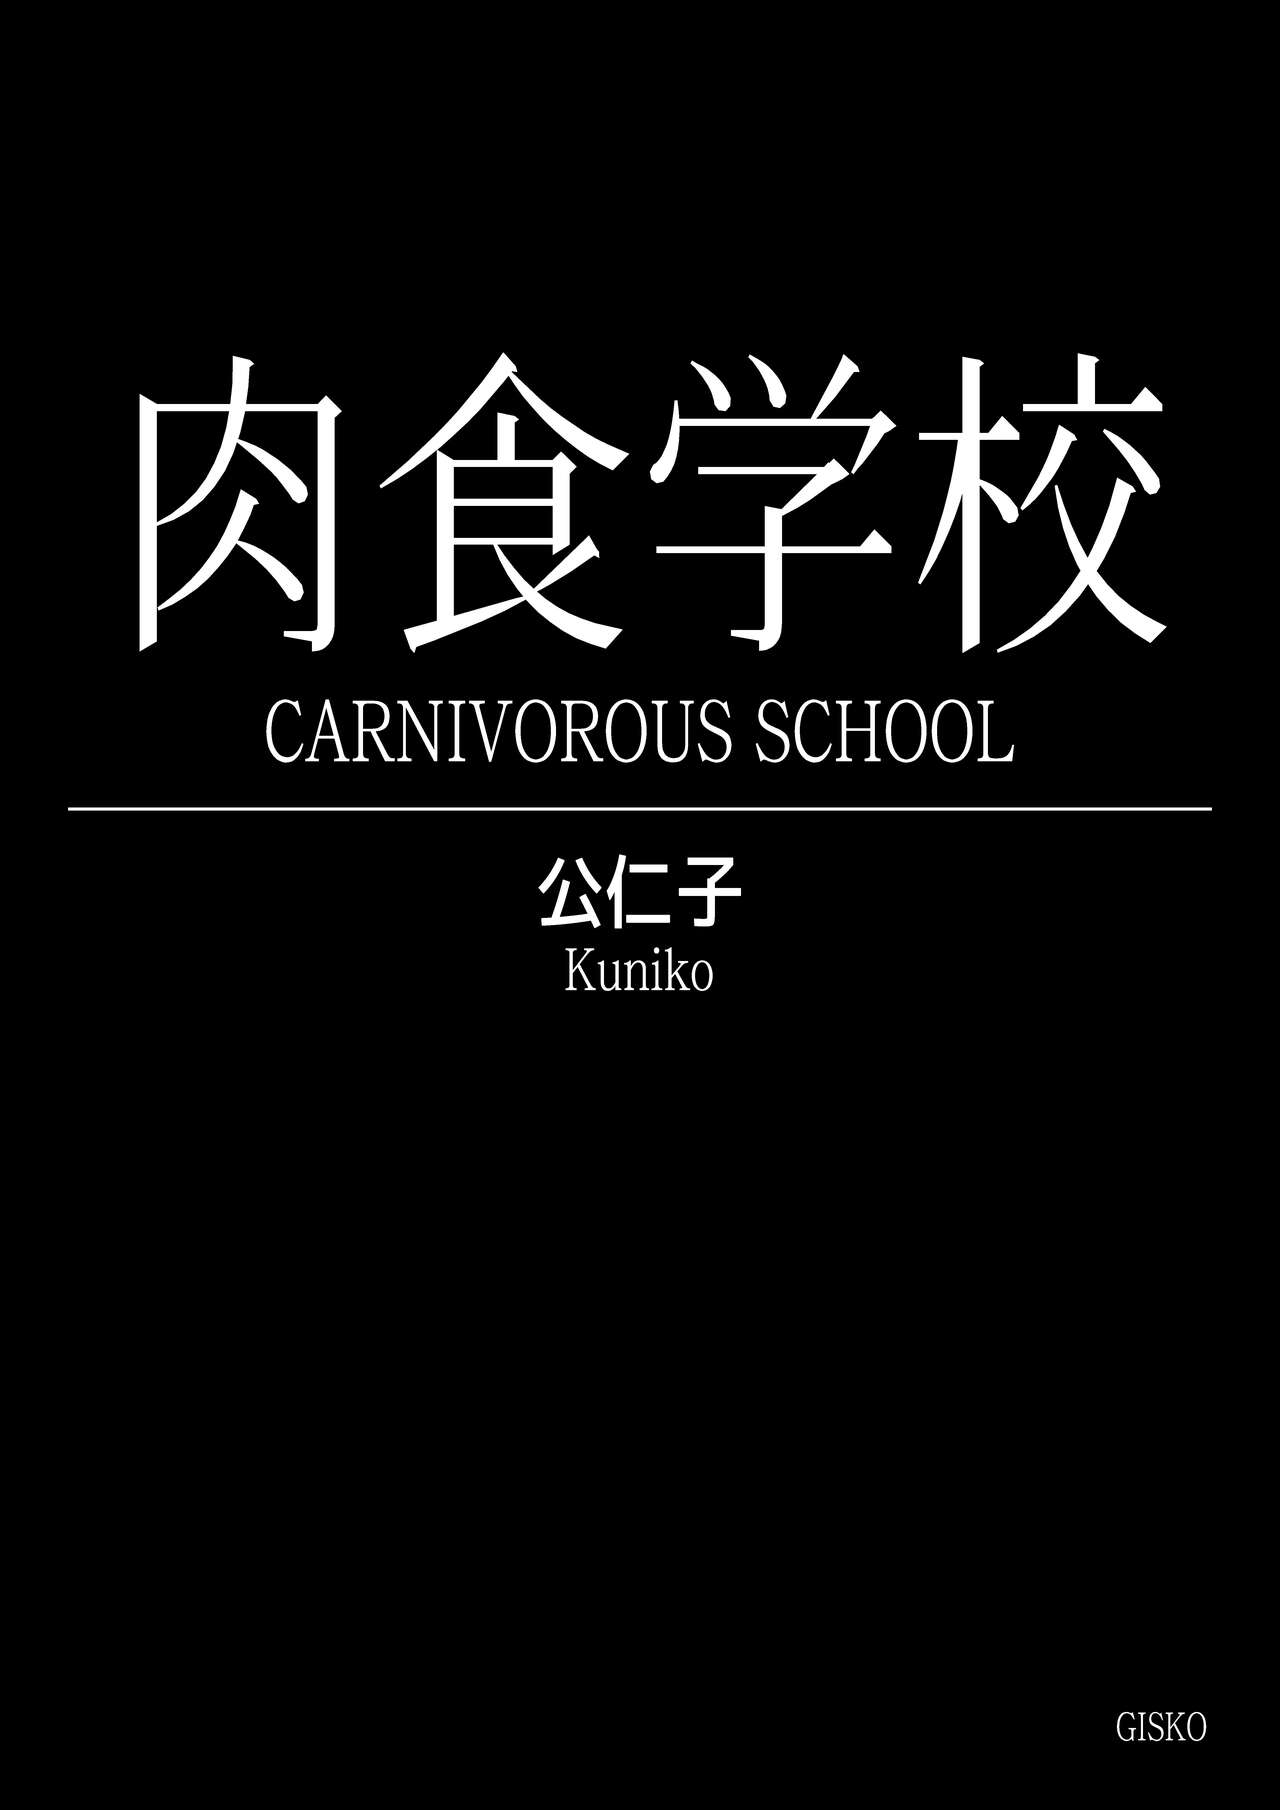 [GISKO] Carnivorous School EP2: Kuniko 23